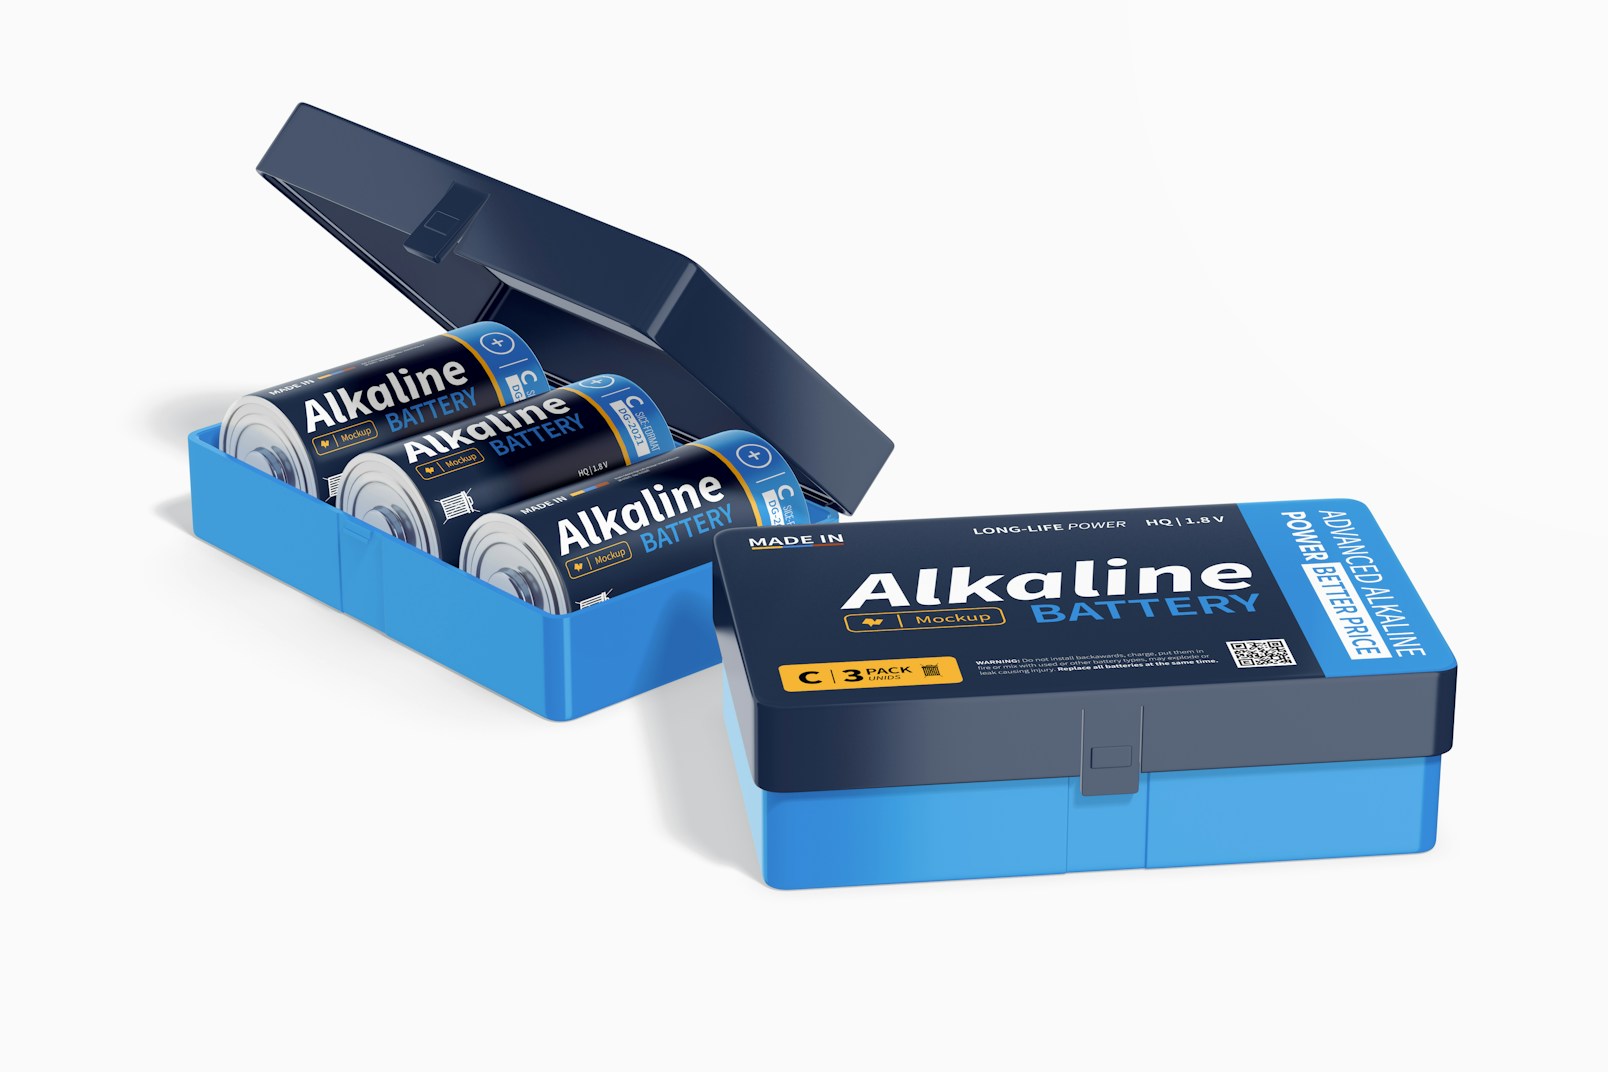 Alkaline Batteries Type C With Case Mockup